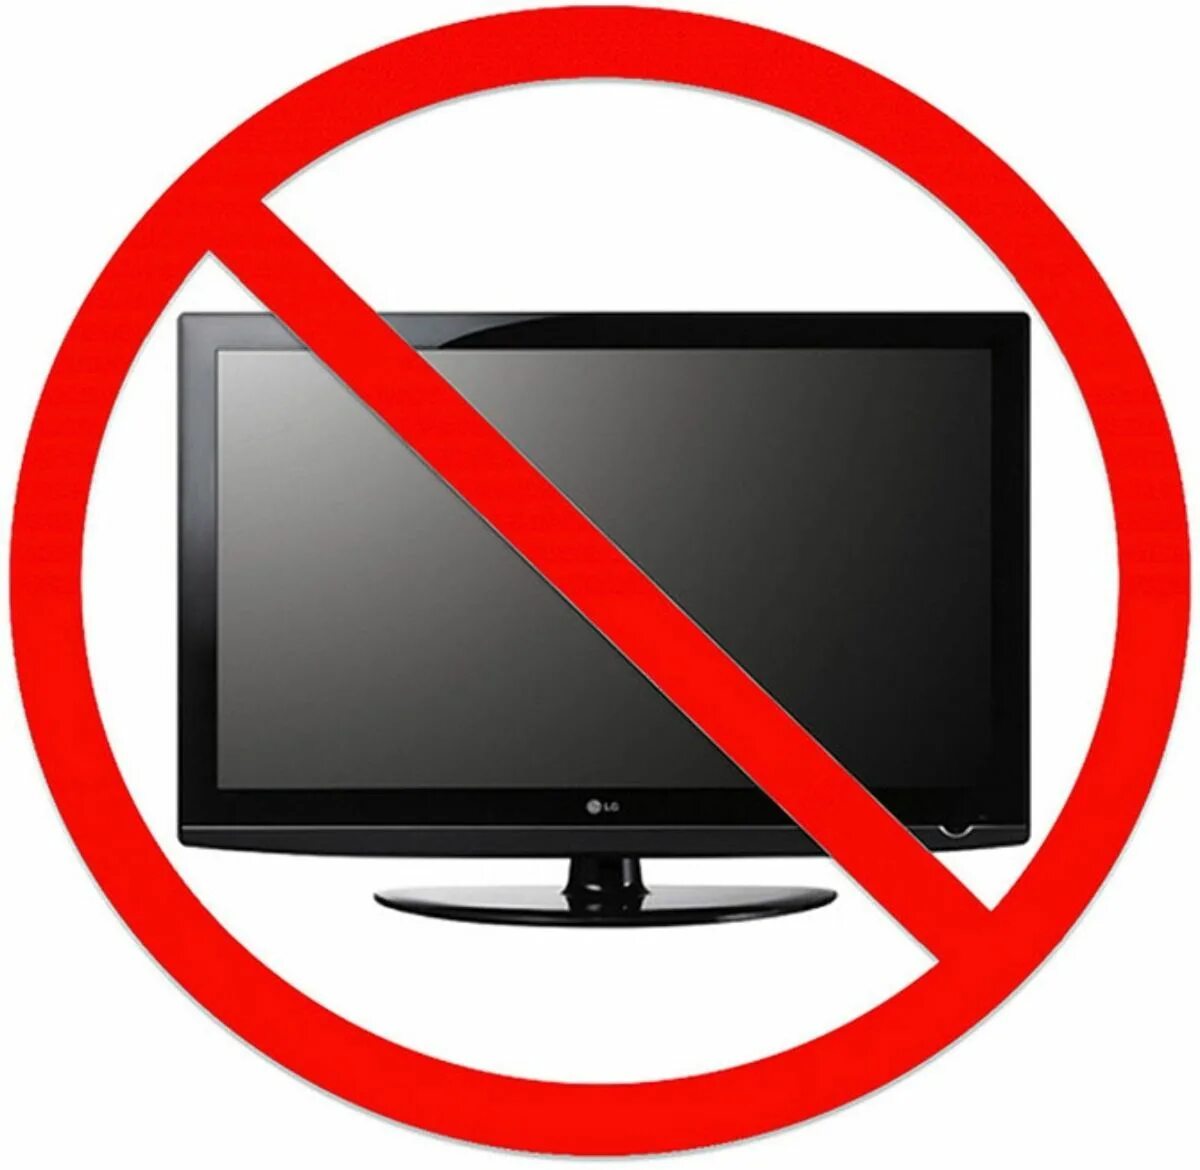 Изображение телевизора красное. Телевизор запрещен. Нет телевизору. Перечеркнутый телевизор. Телевизор выключенный.